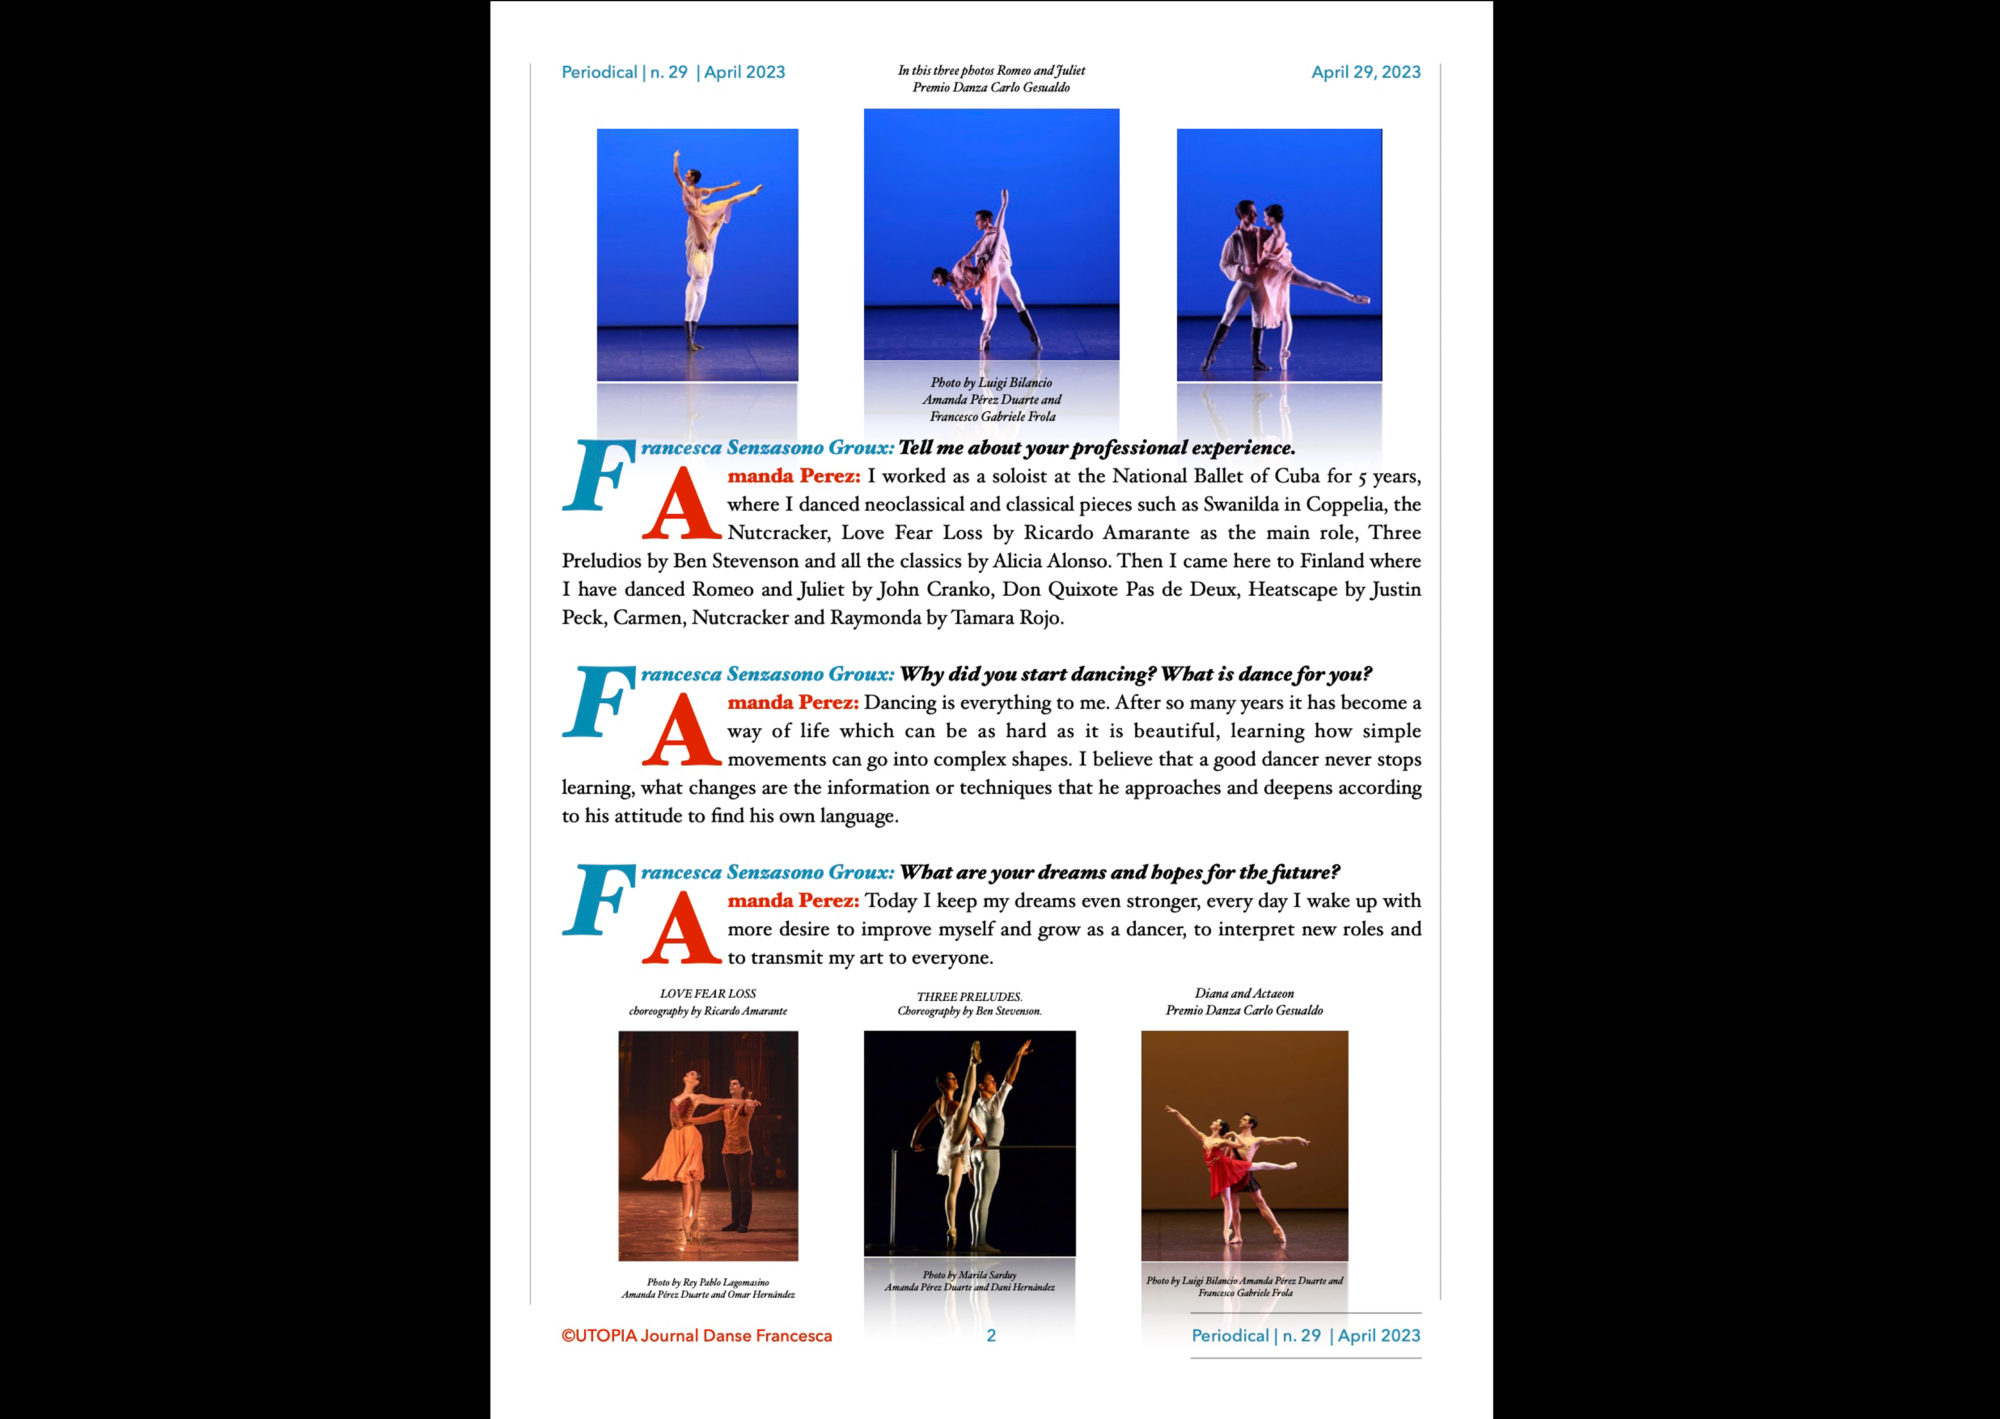 ©UTOPIA Journal Danse Francesca Periodical n.29 April 29, 2023 page 2